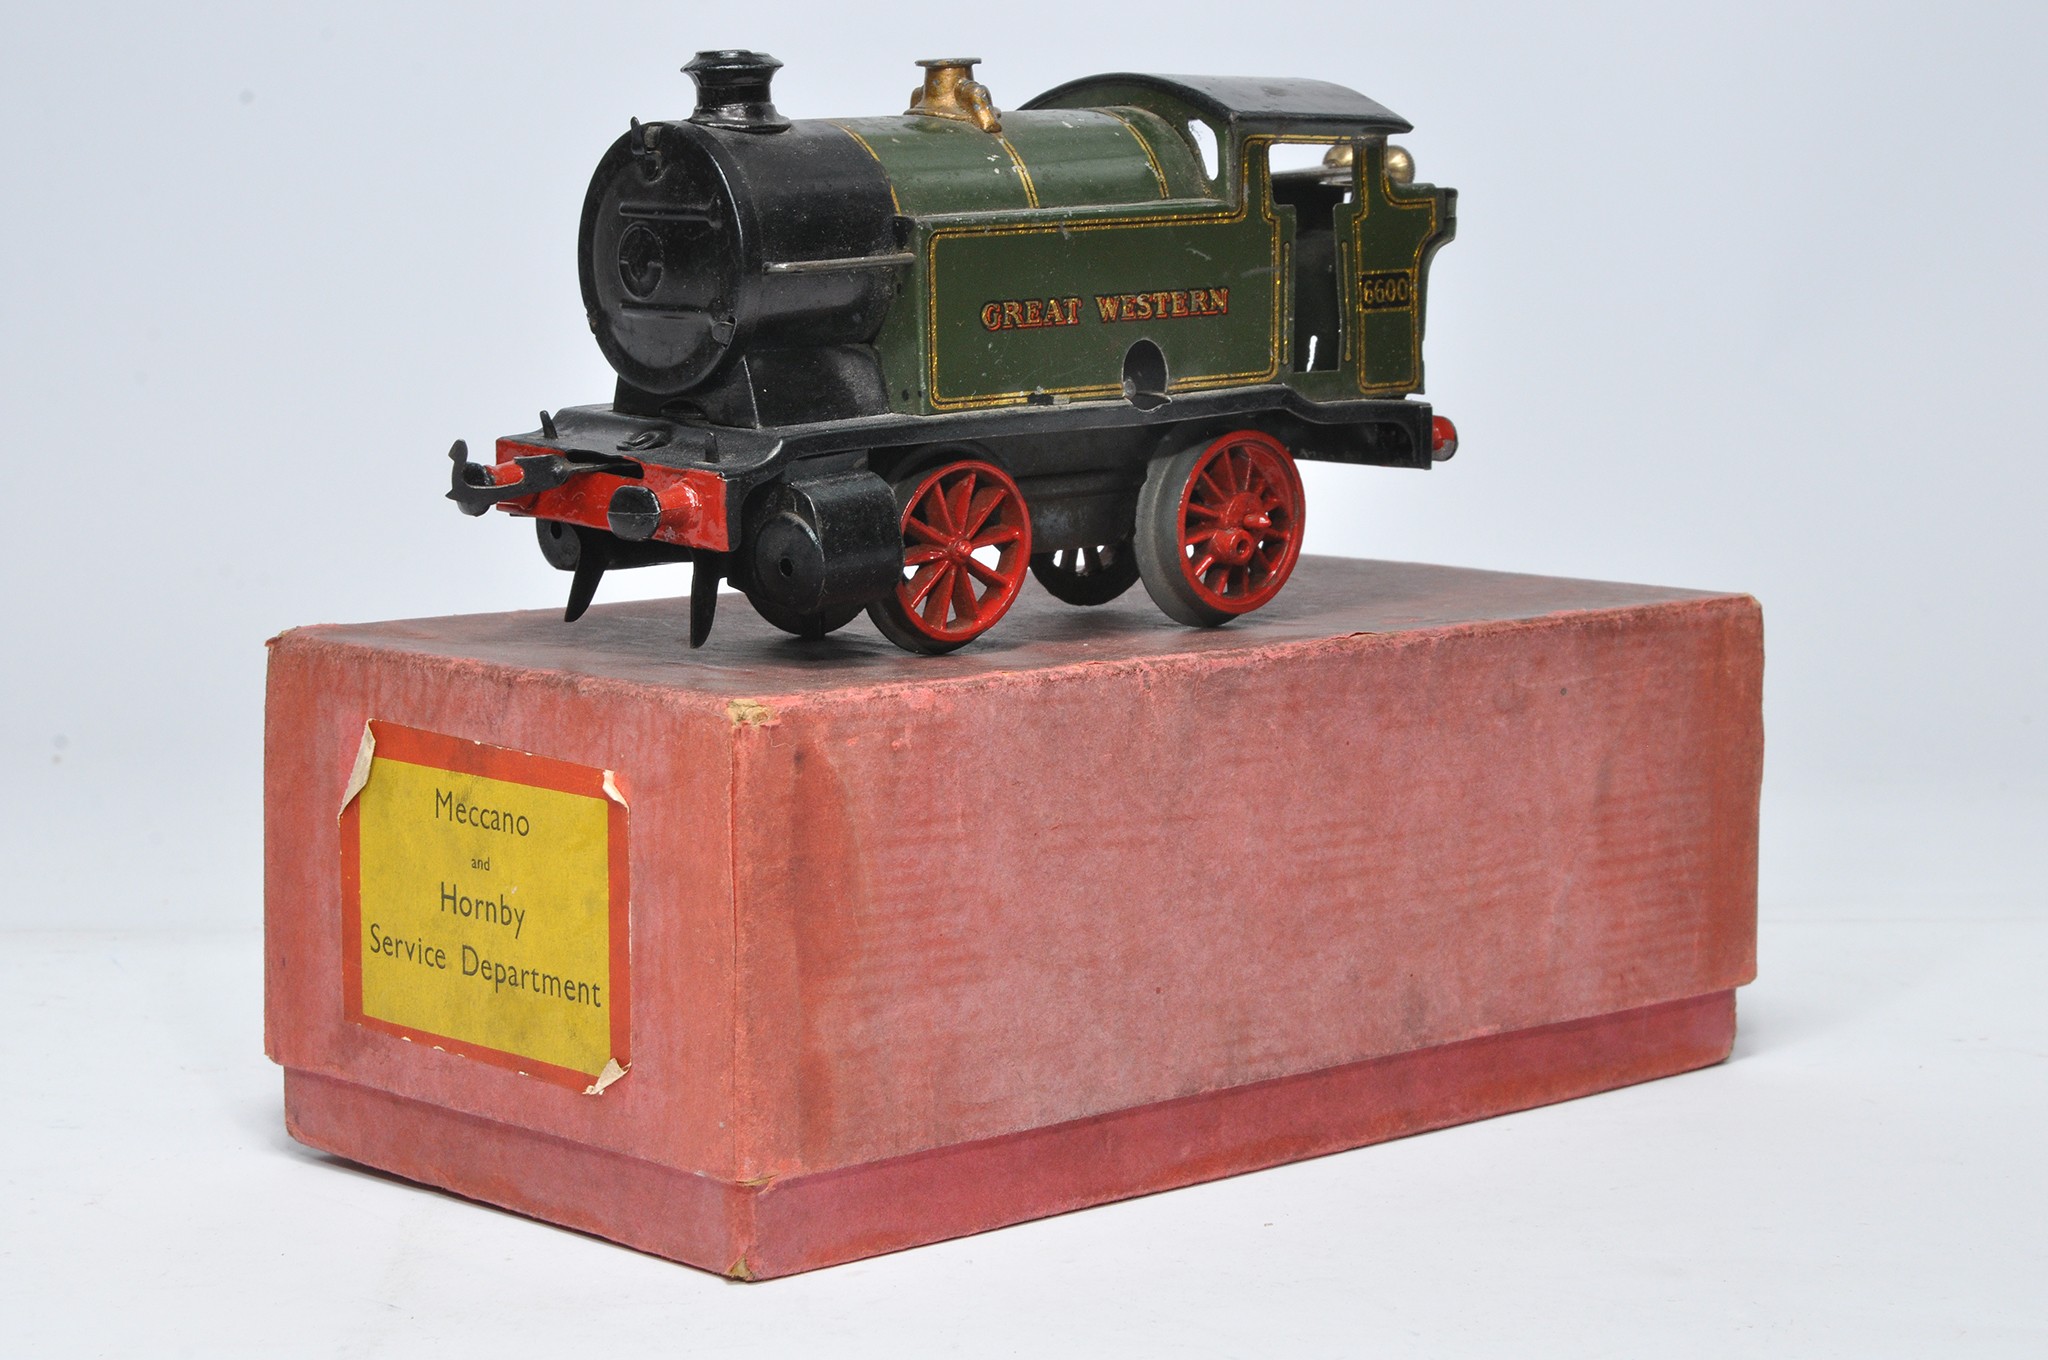 Hornby O Gauge Model Railway comprising Tank Locomotive, Great Western, No. 6600. Displays generally